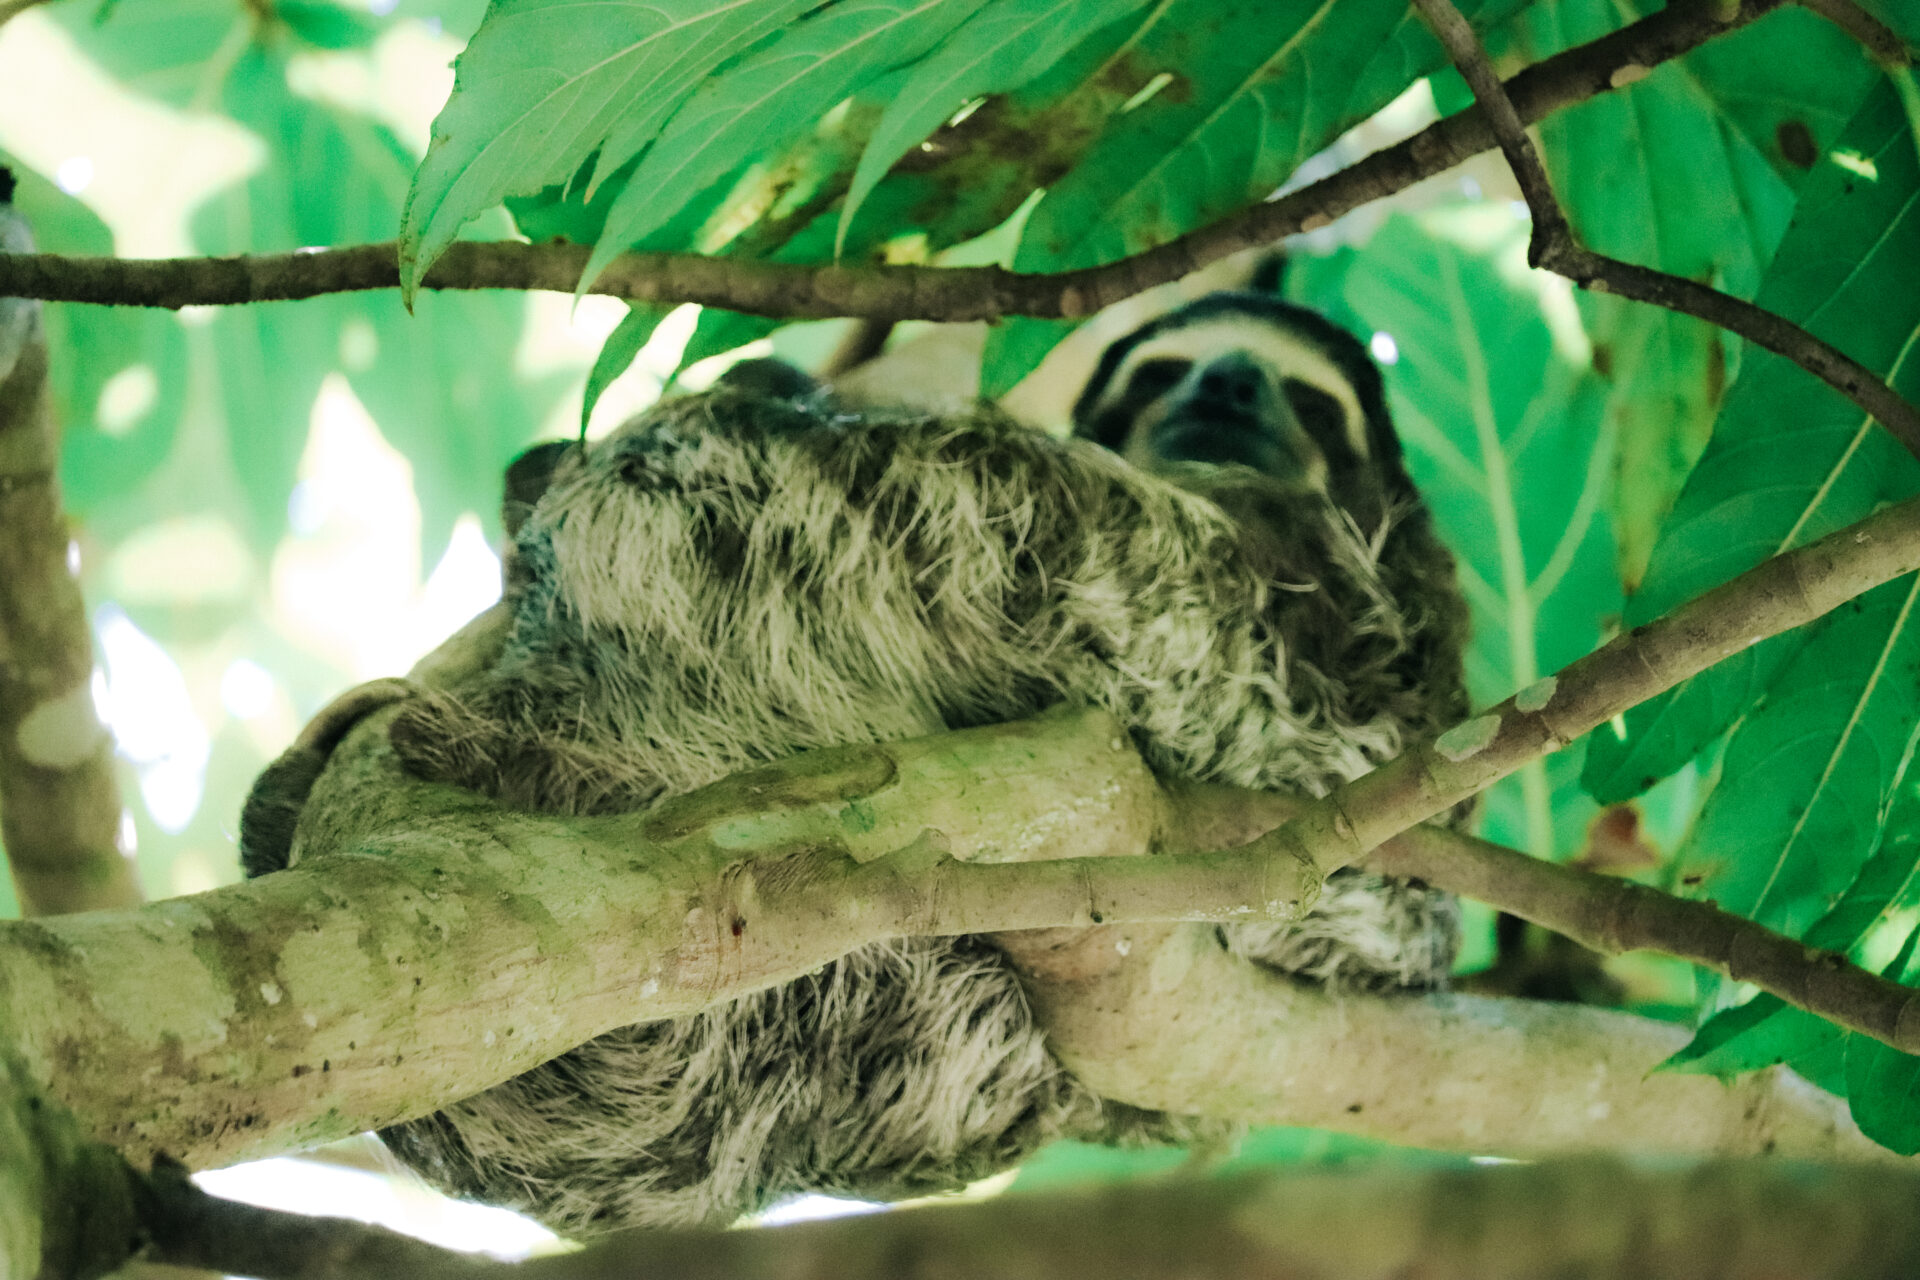 Wild sloth in Cahuita National Park, Playa Blanca, Costa Rica